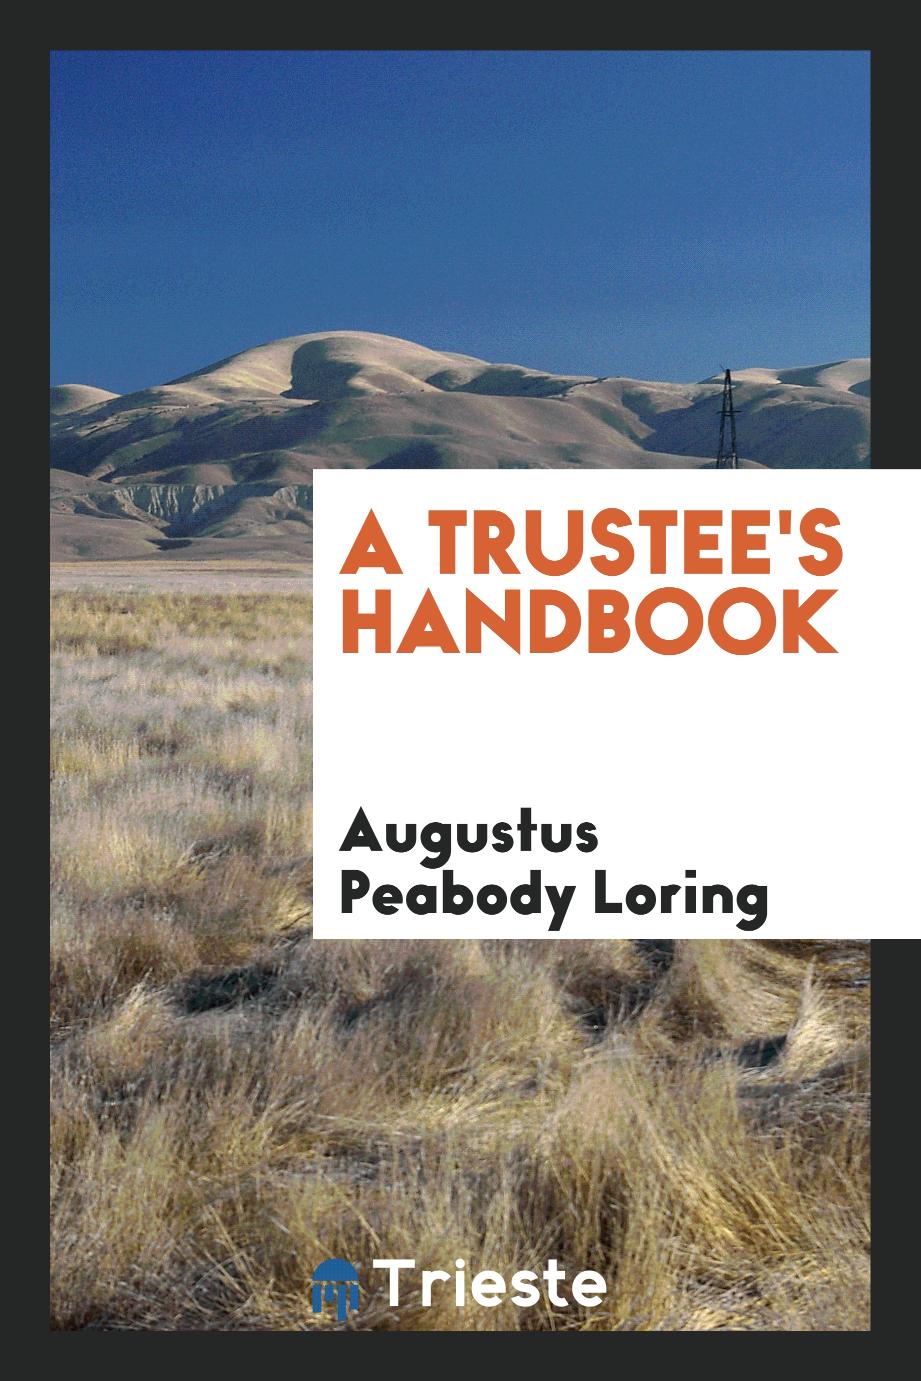 A trustee's handbook